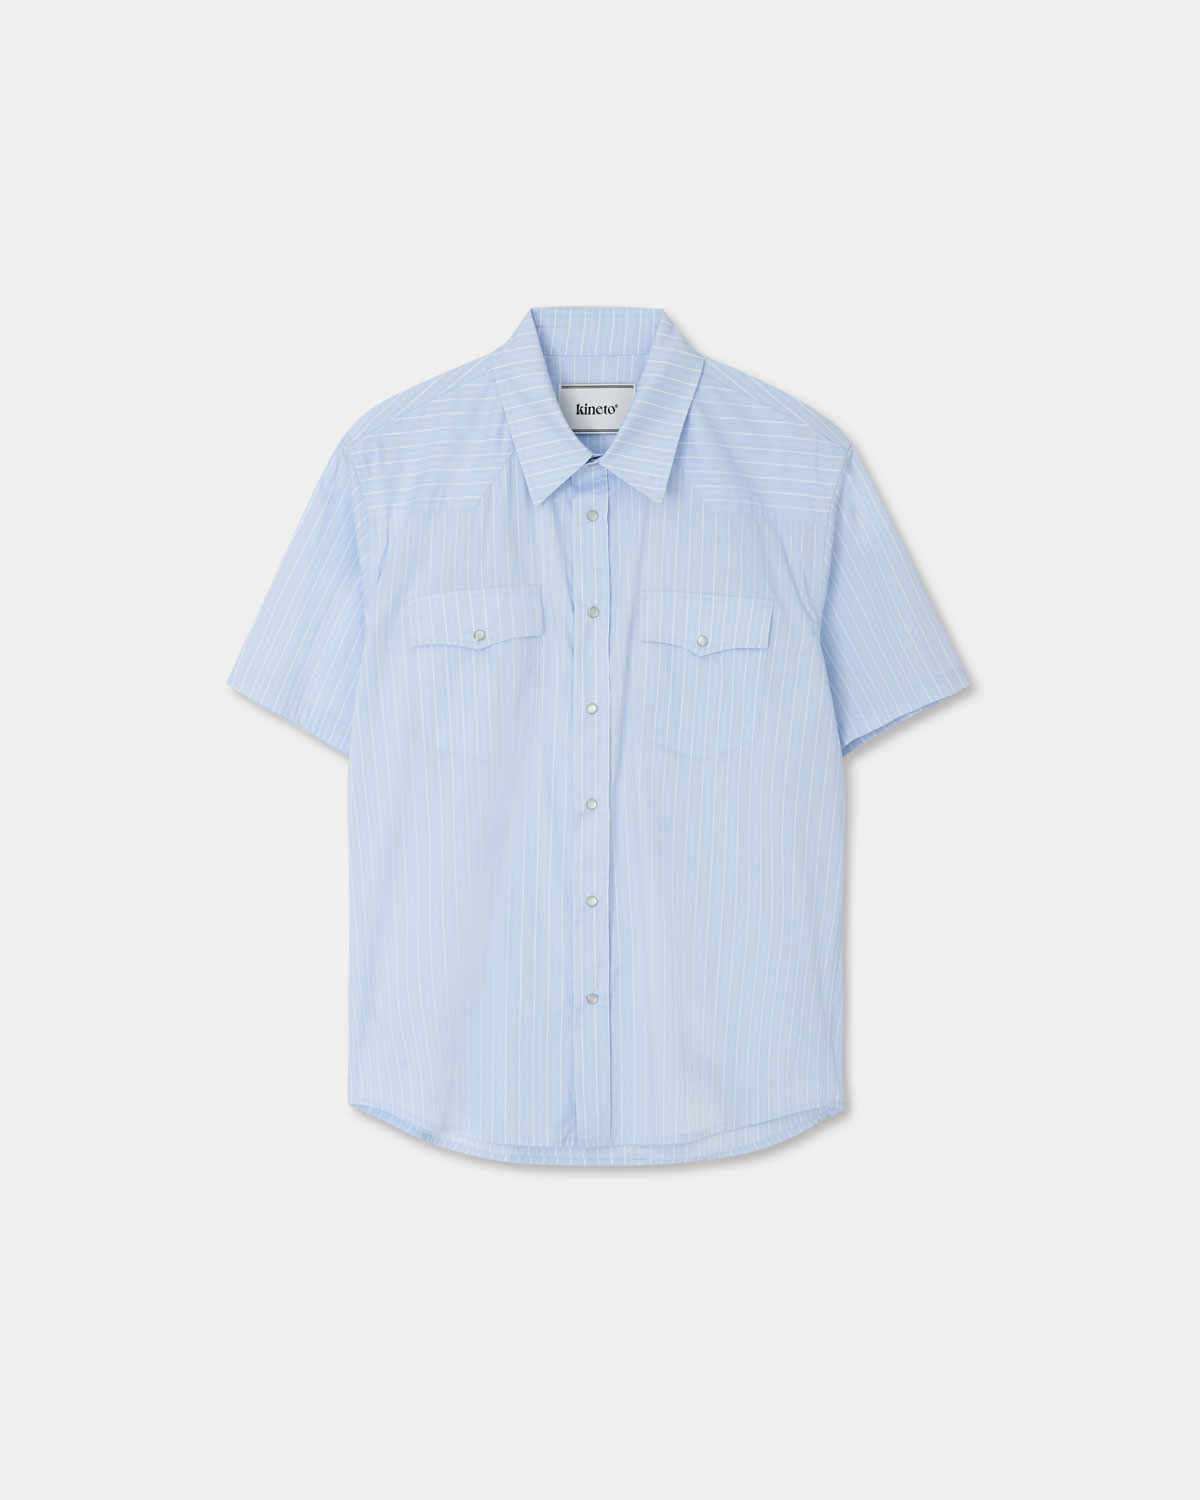 Western Stripe Pattern Shirt_Sky Blue_예약 배송 05/17